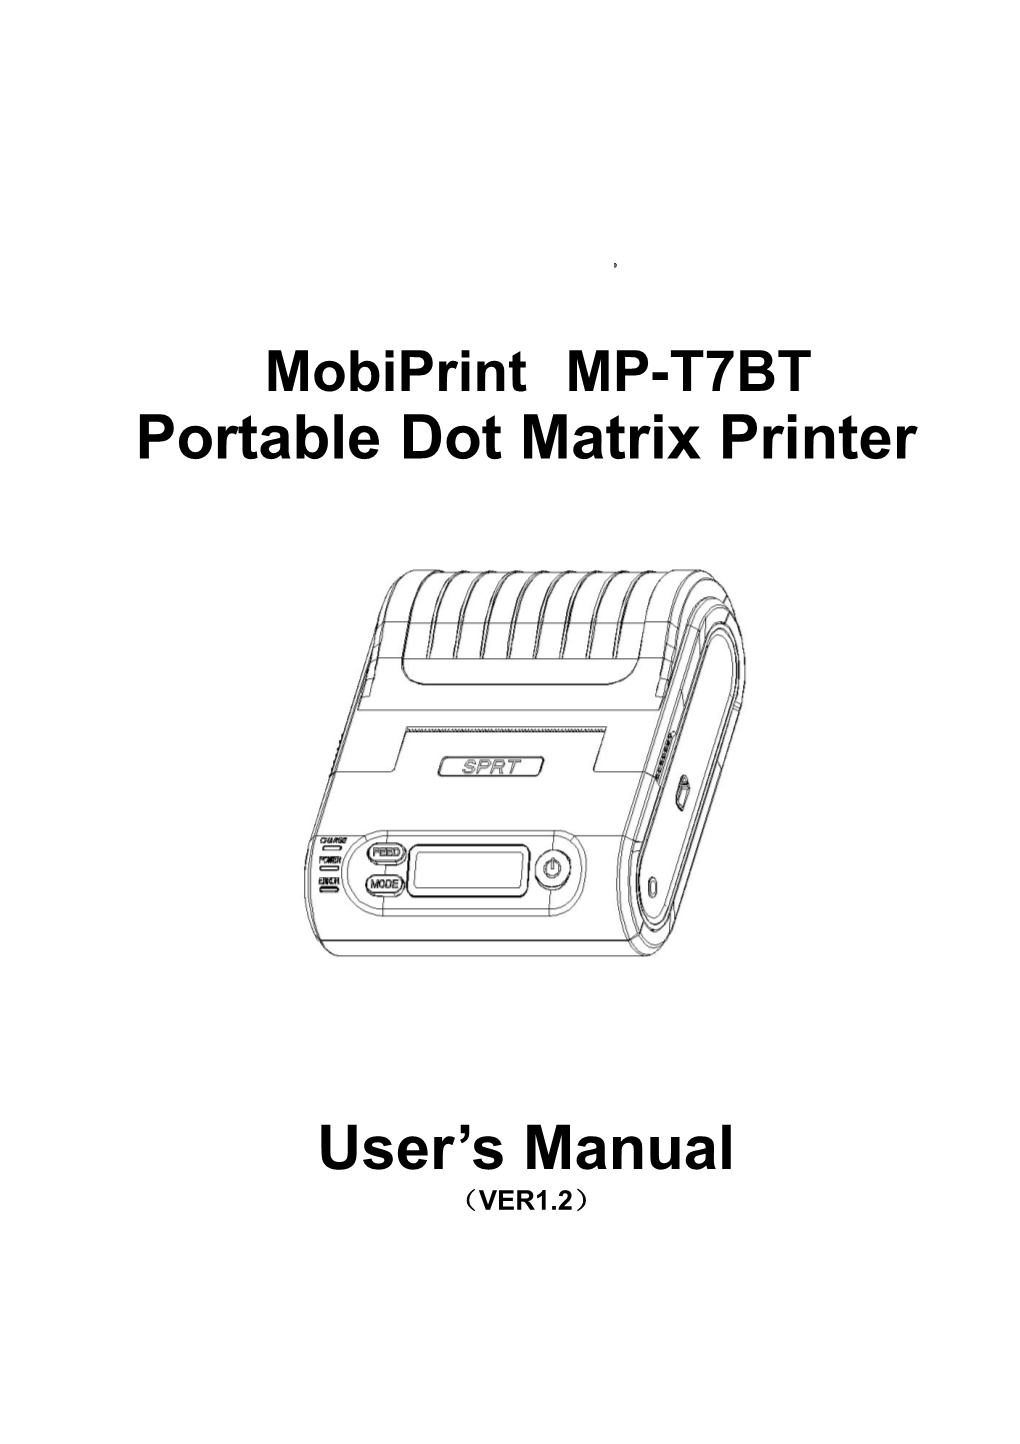 Portable Dot Matrix Printer User's Manual